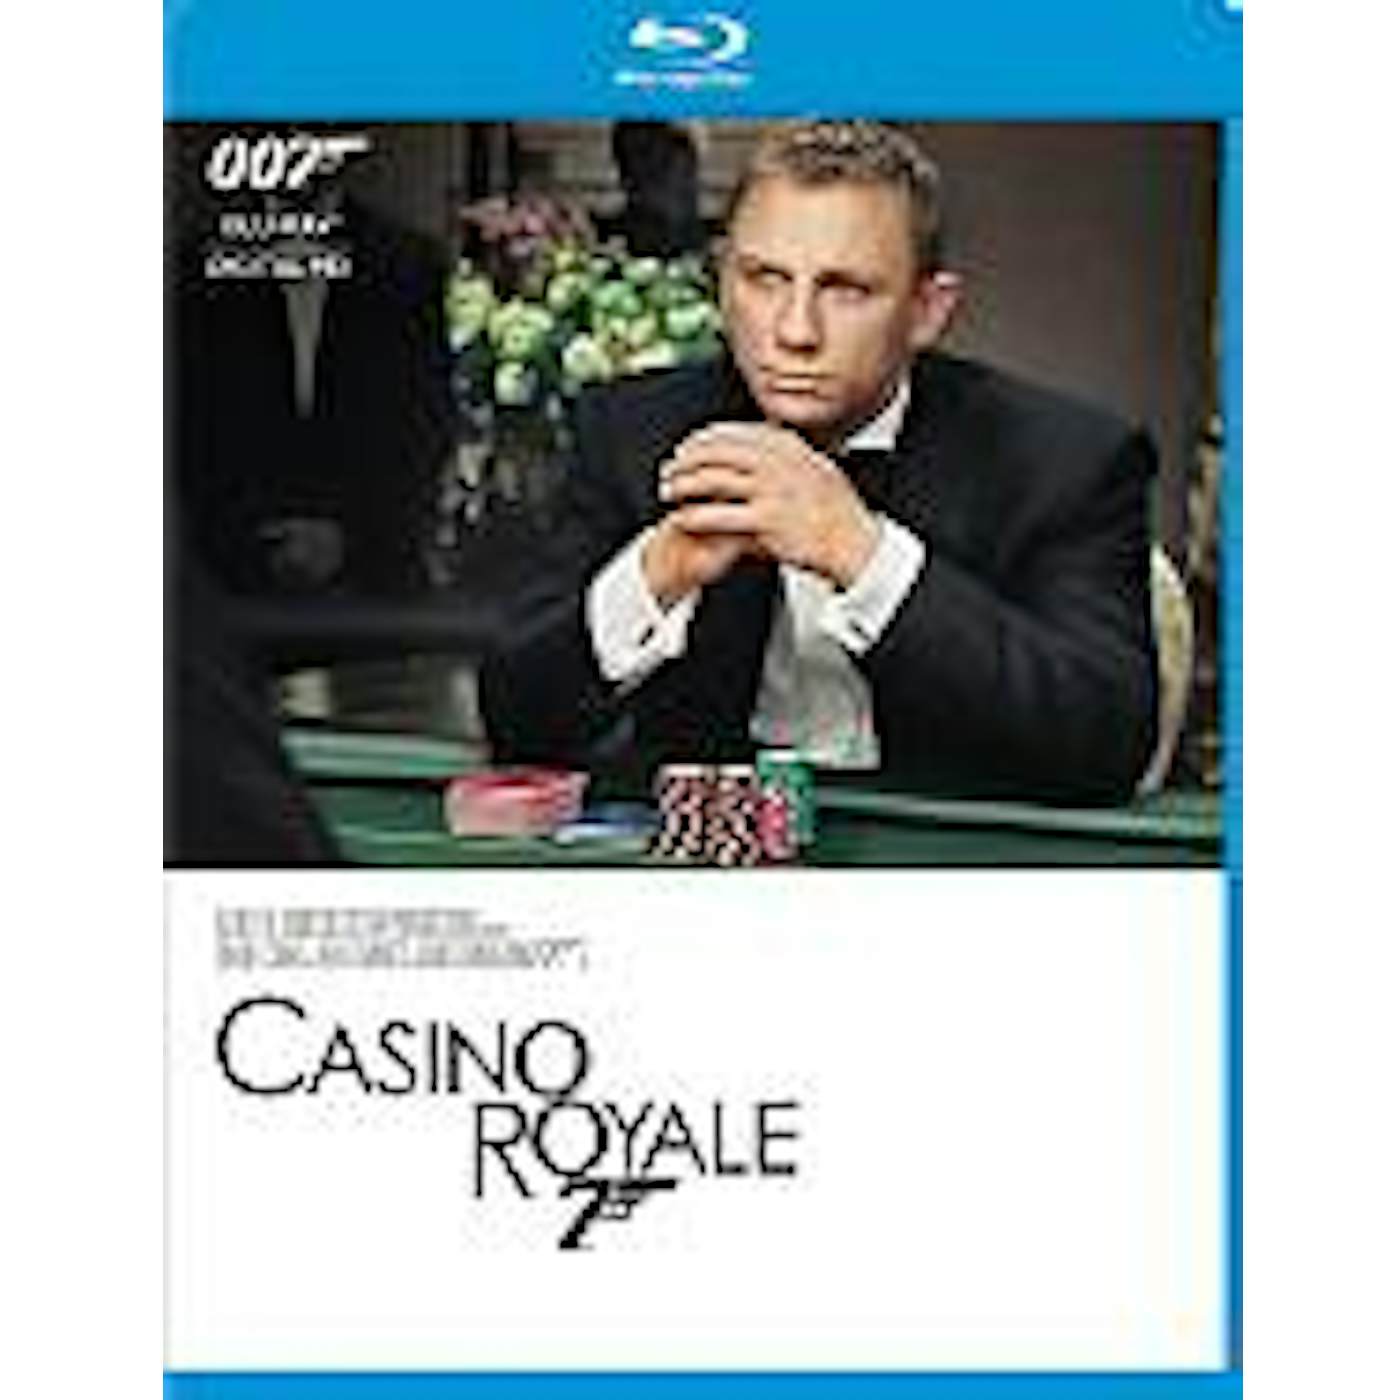 CASINO ROYALE Blu-ray